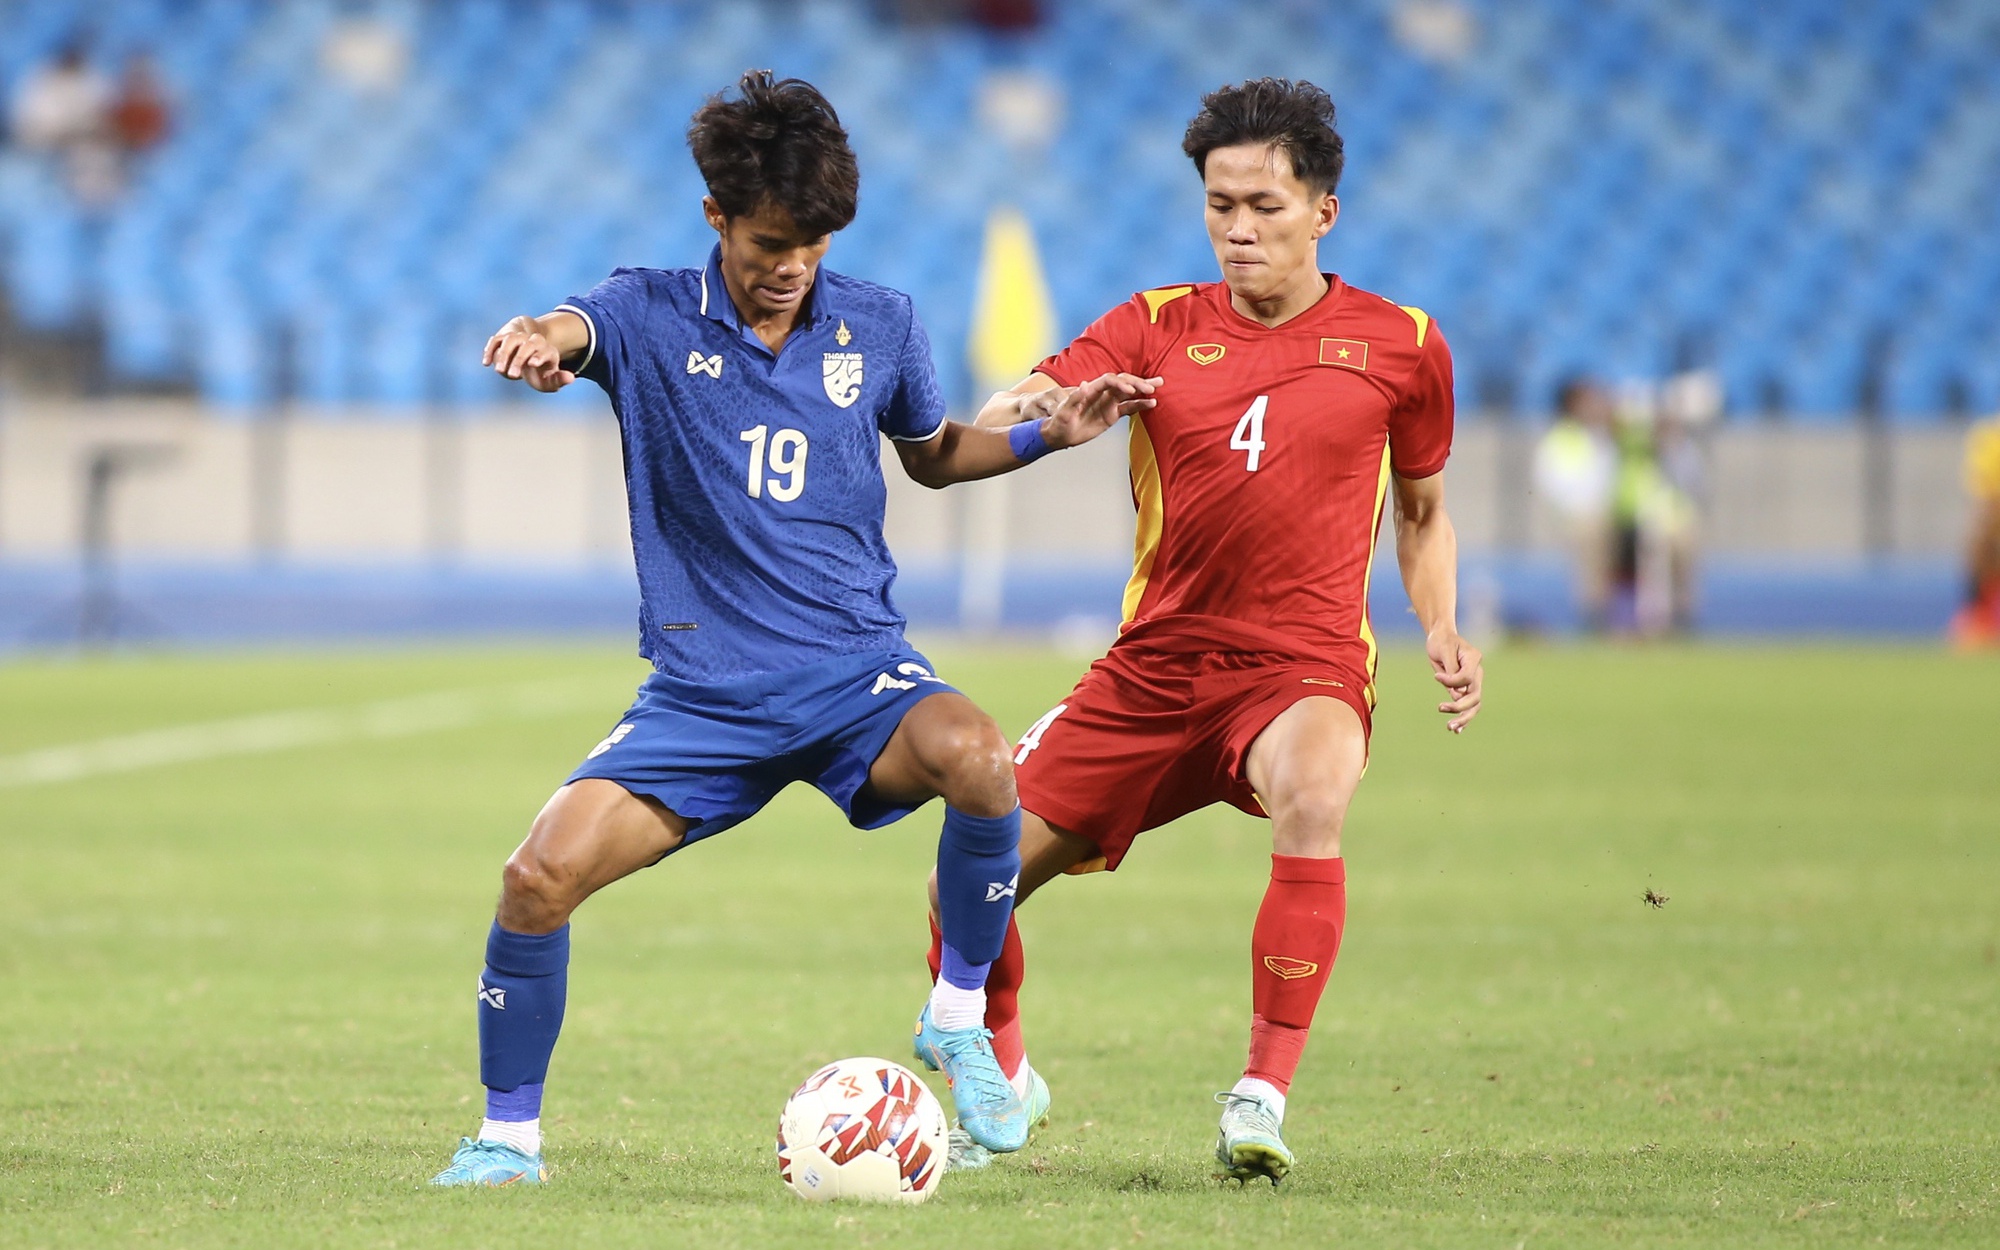 Morning (2/6): AFC suddenly called U23 Vietnam “Giants”